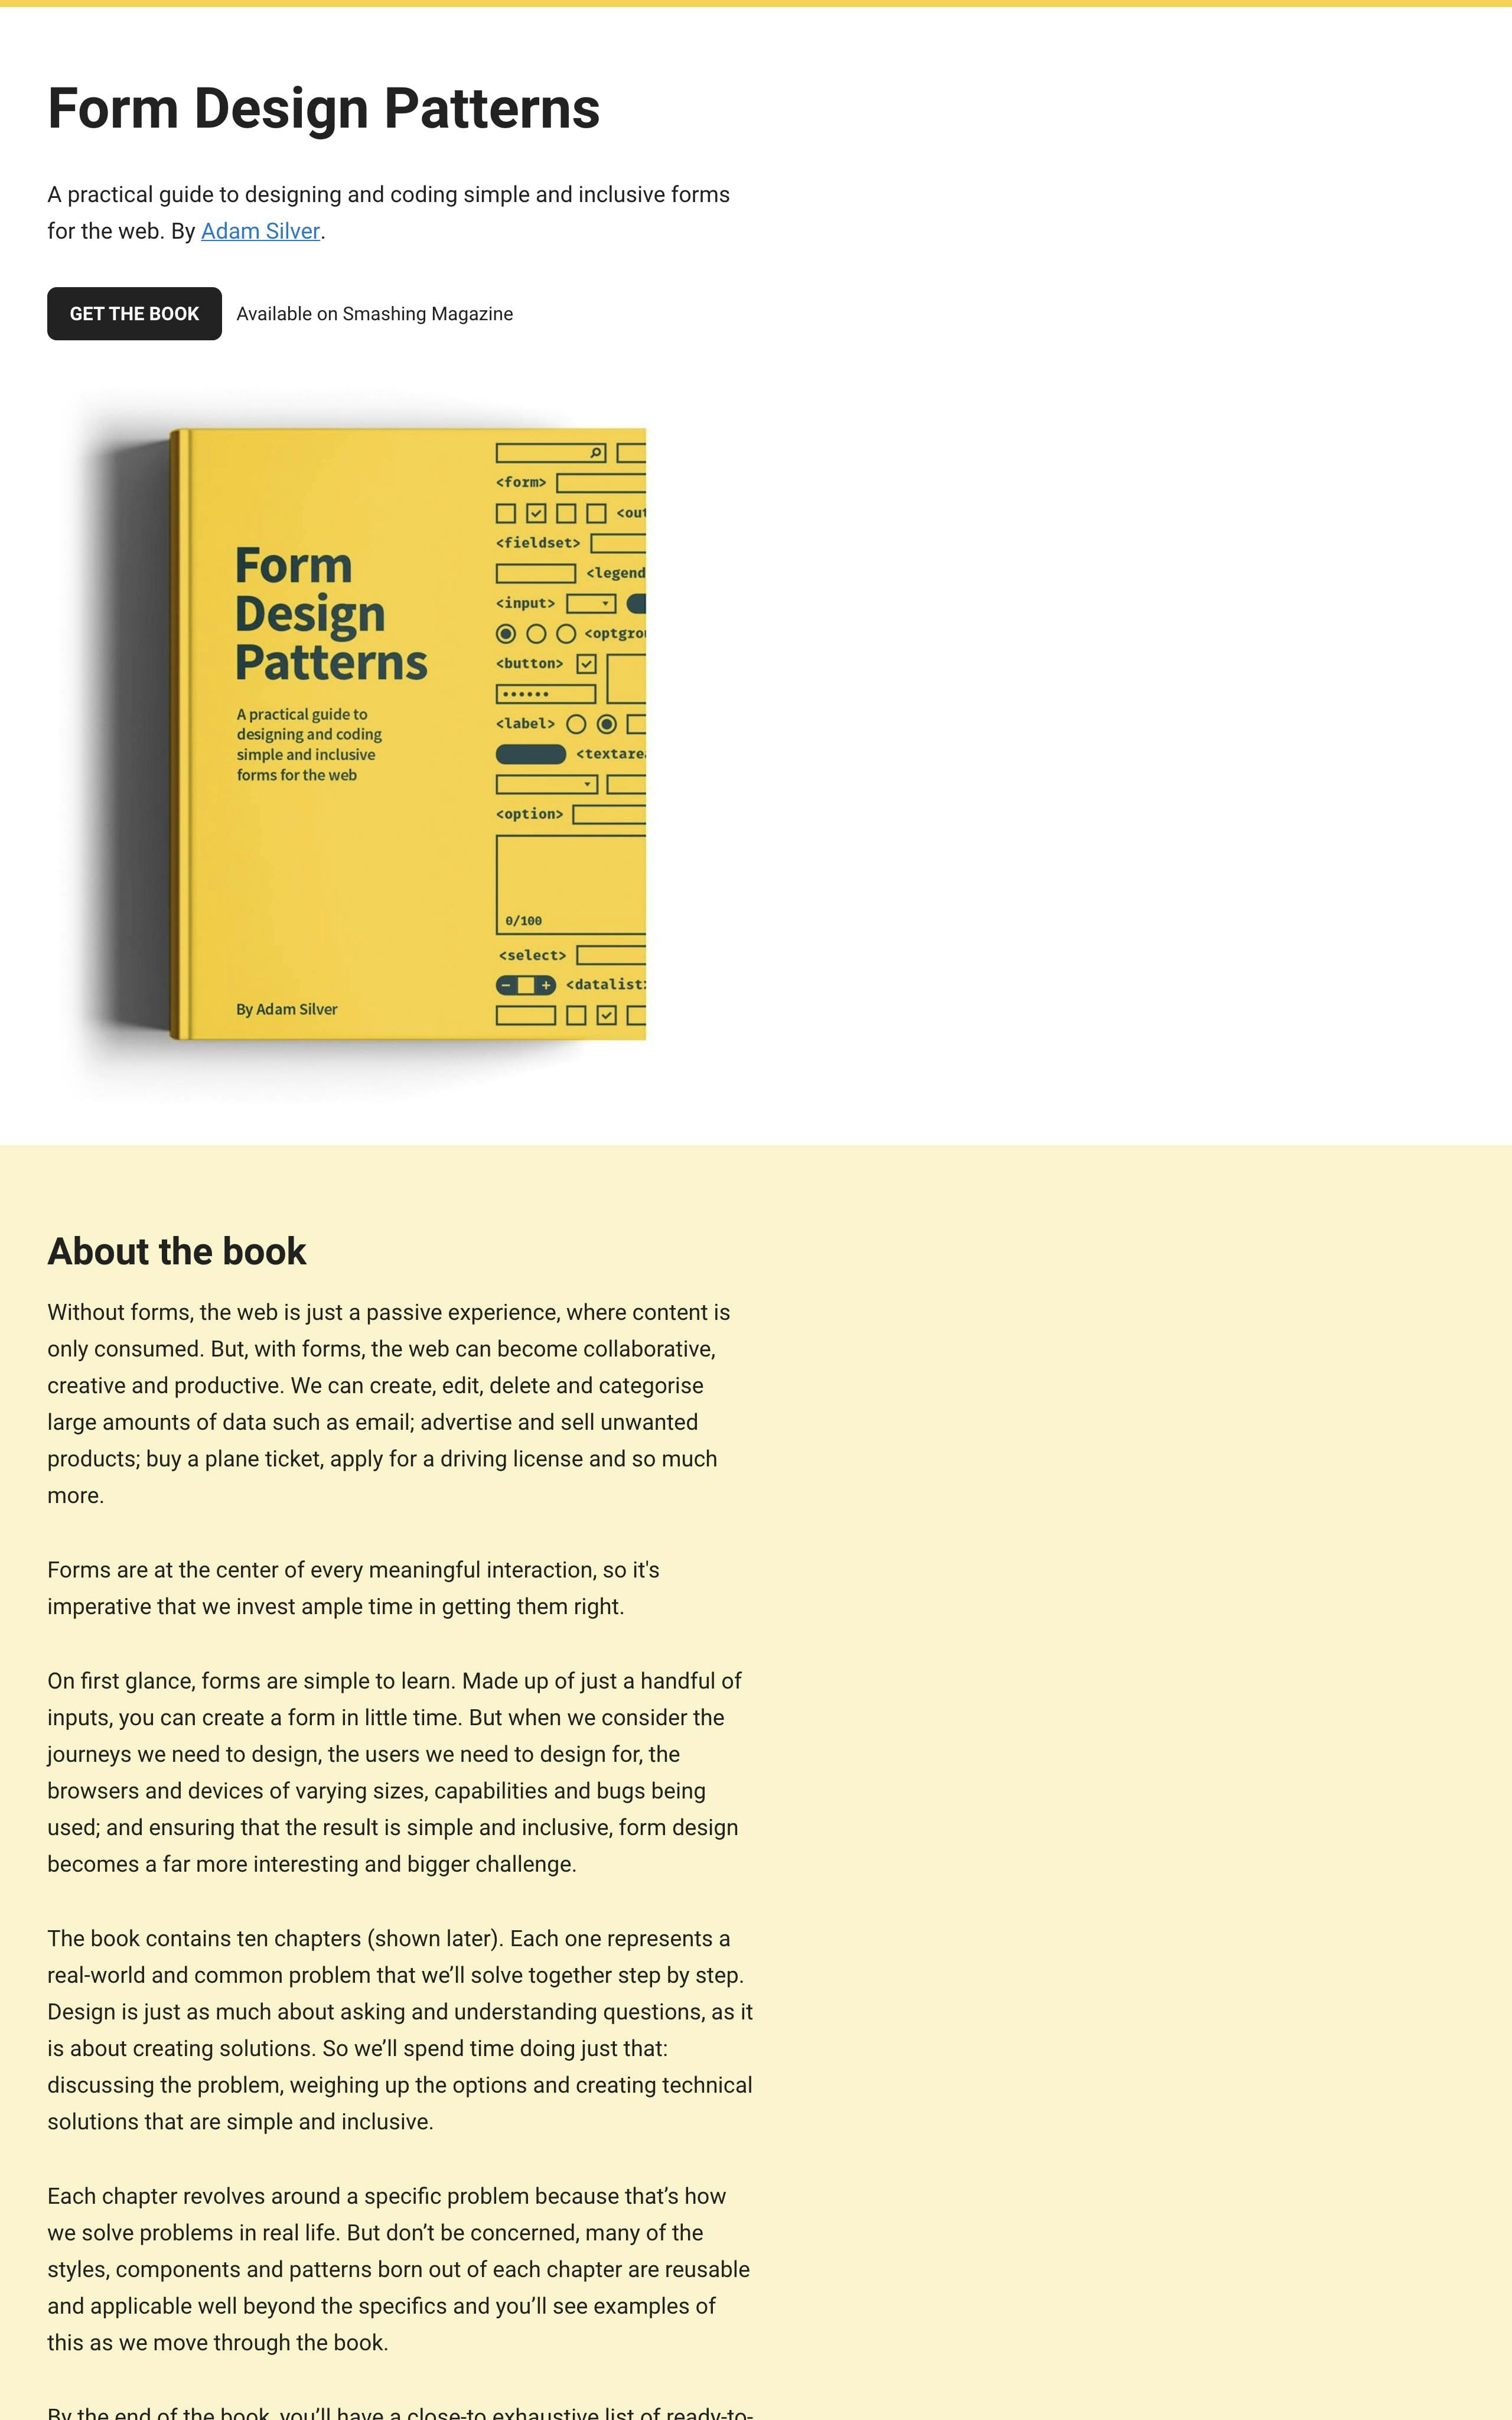 Form Design Patterns Website Screenshot